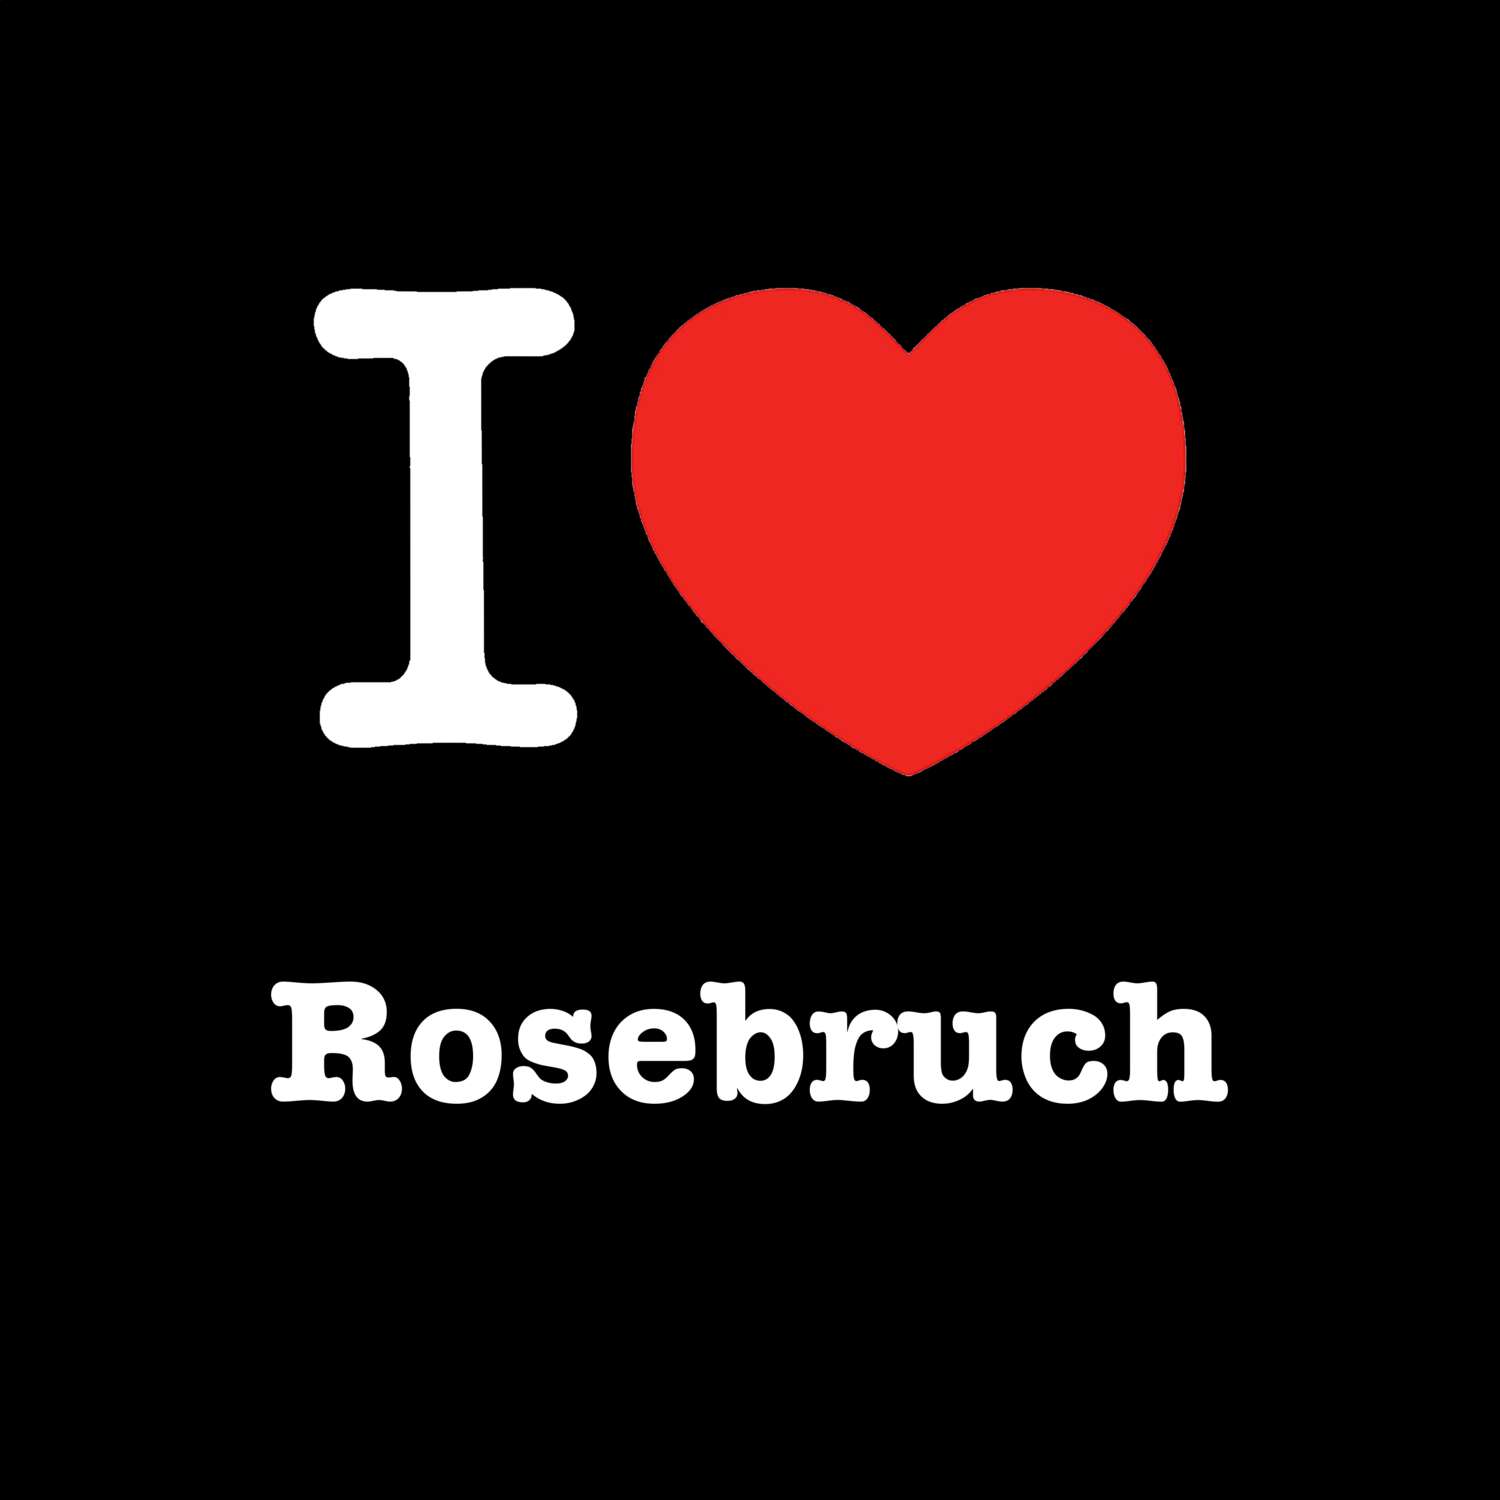 Rosebruch T-Shirt »I love«